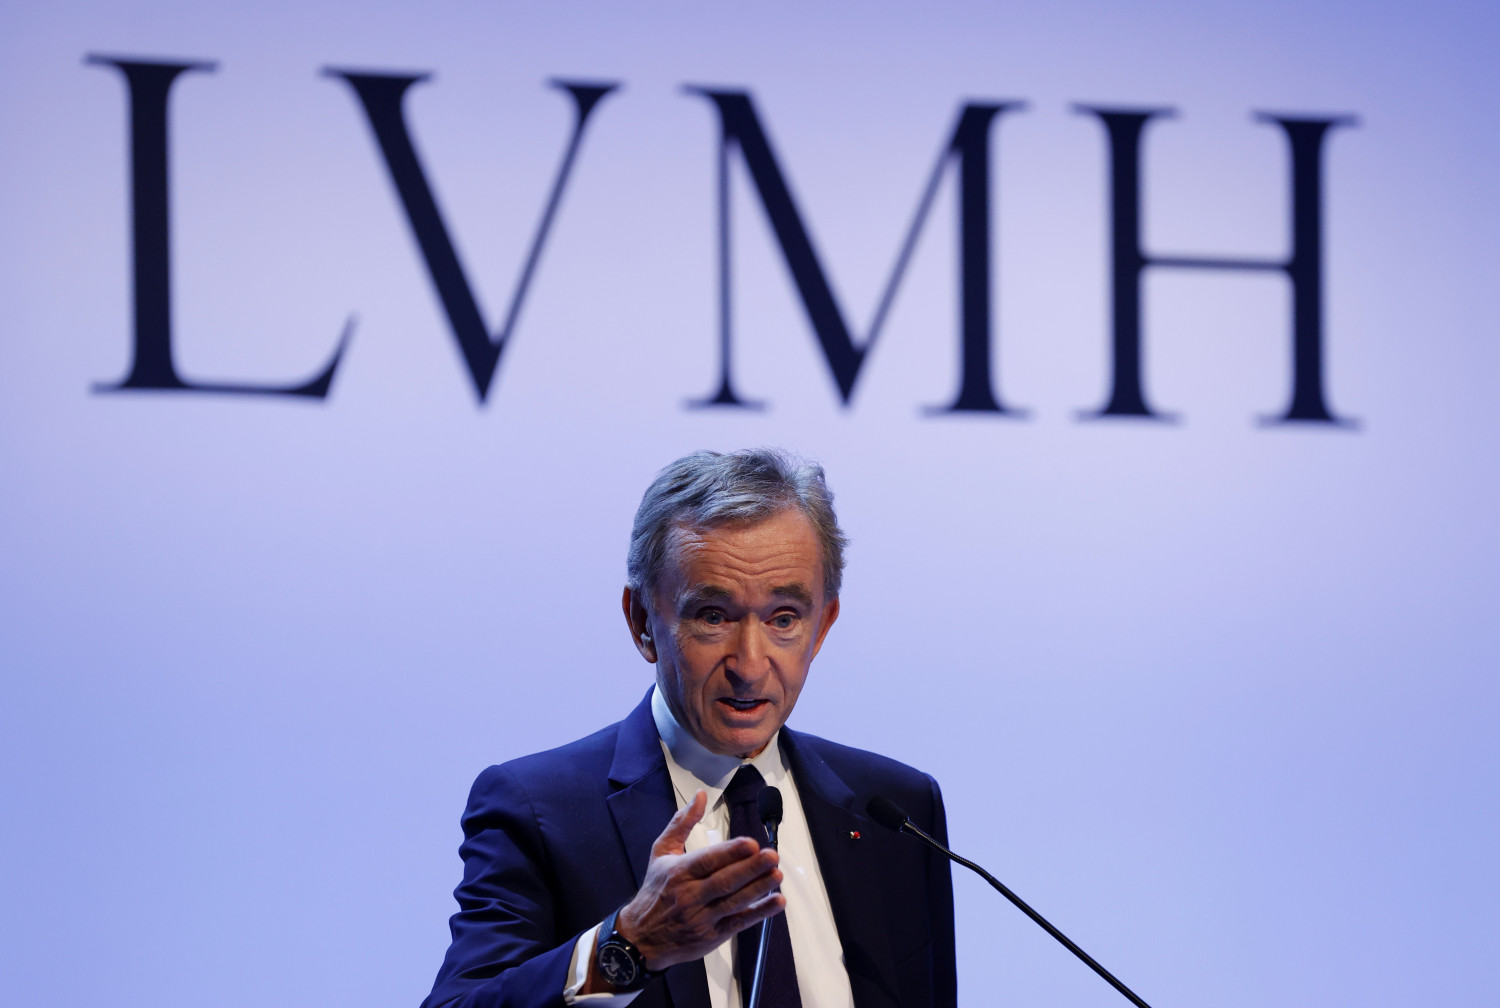 Pietro Beccari, Chairman and CEO of Louis Vuitton